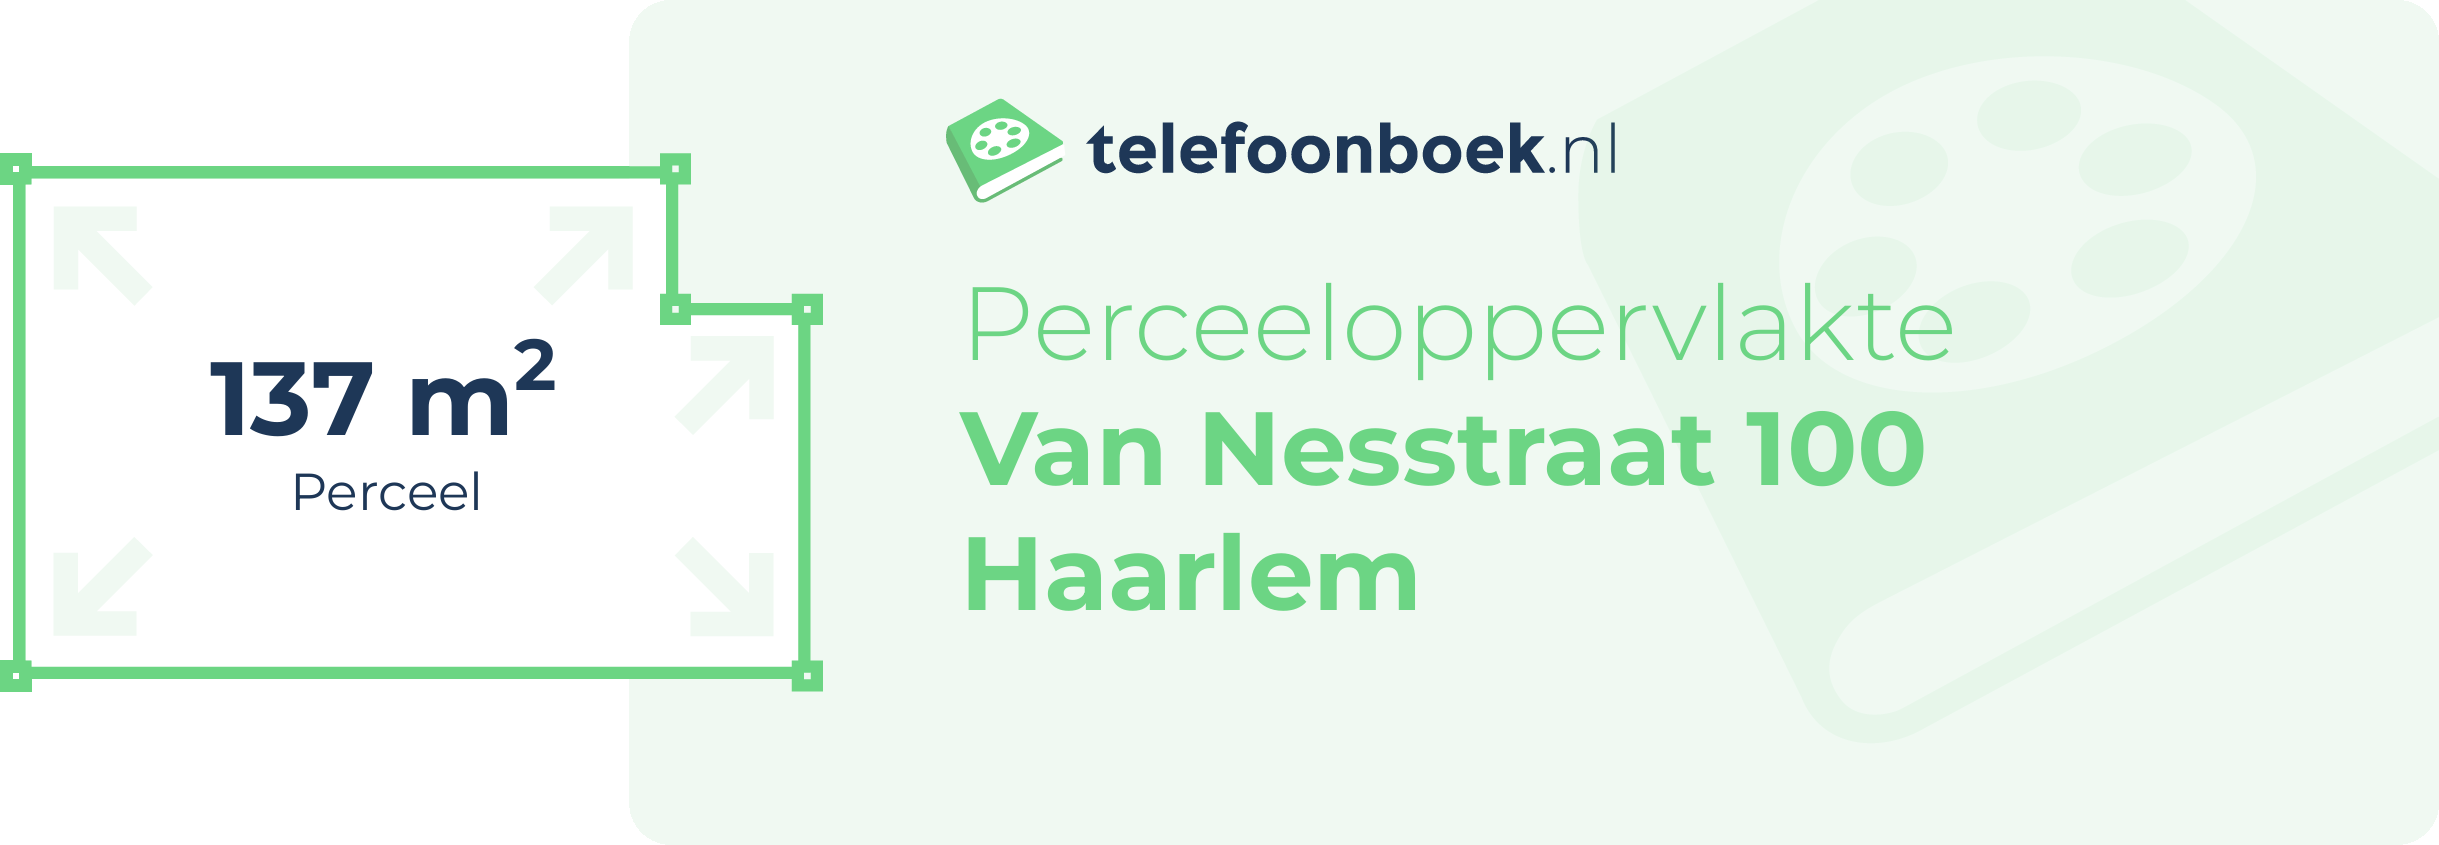 Perceeloppervlakte Van Nesstraat 100 Haarlem